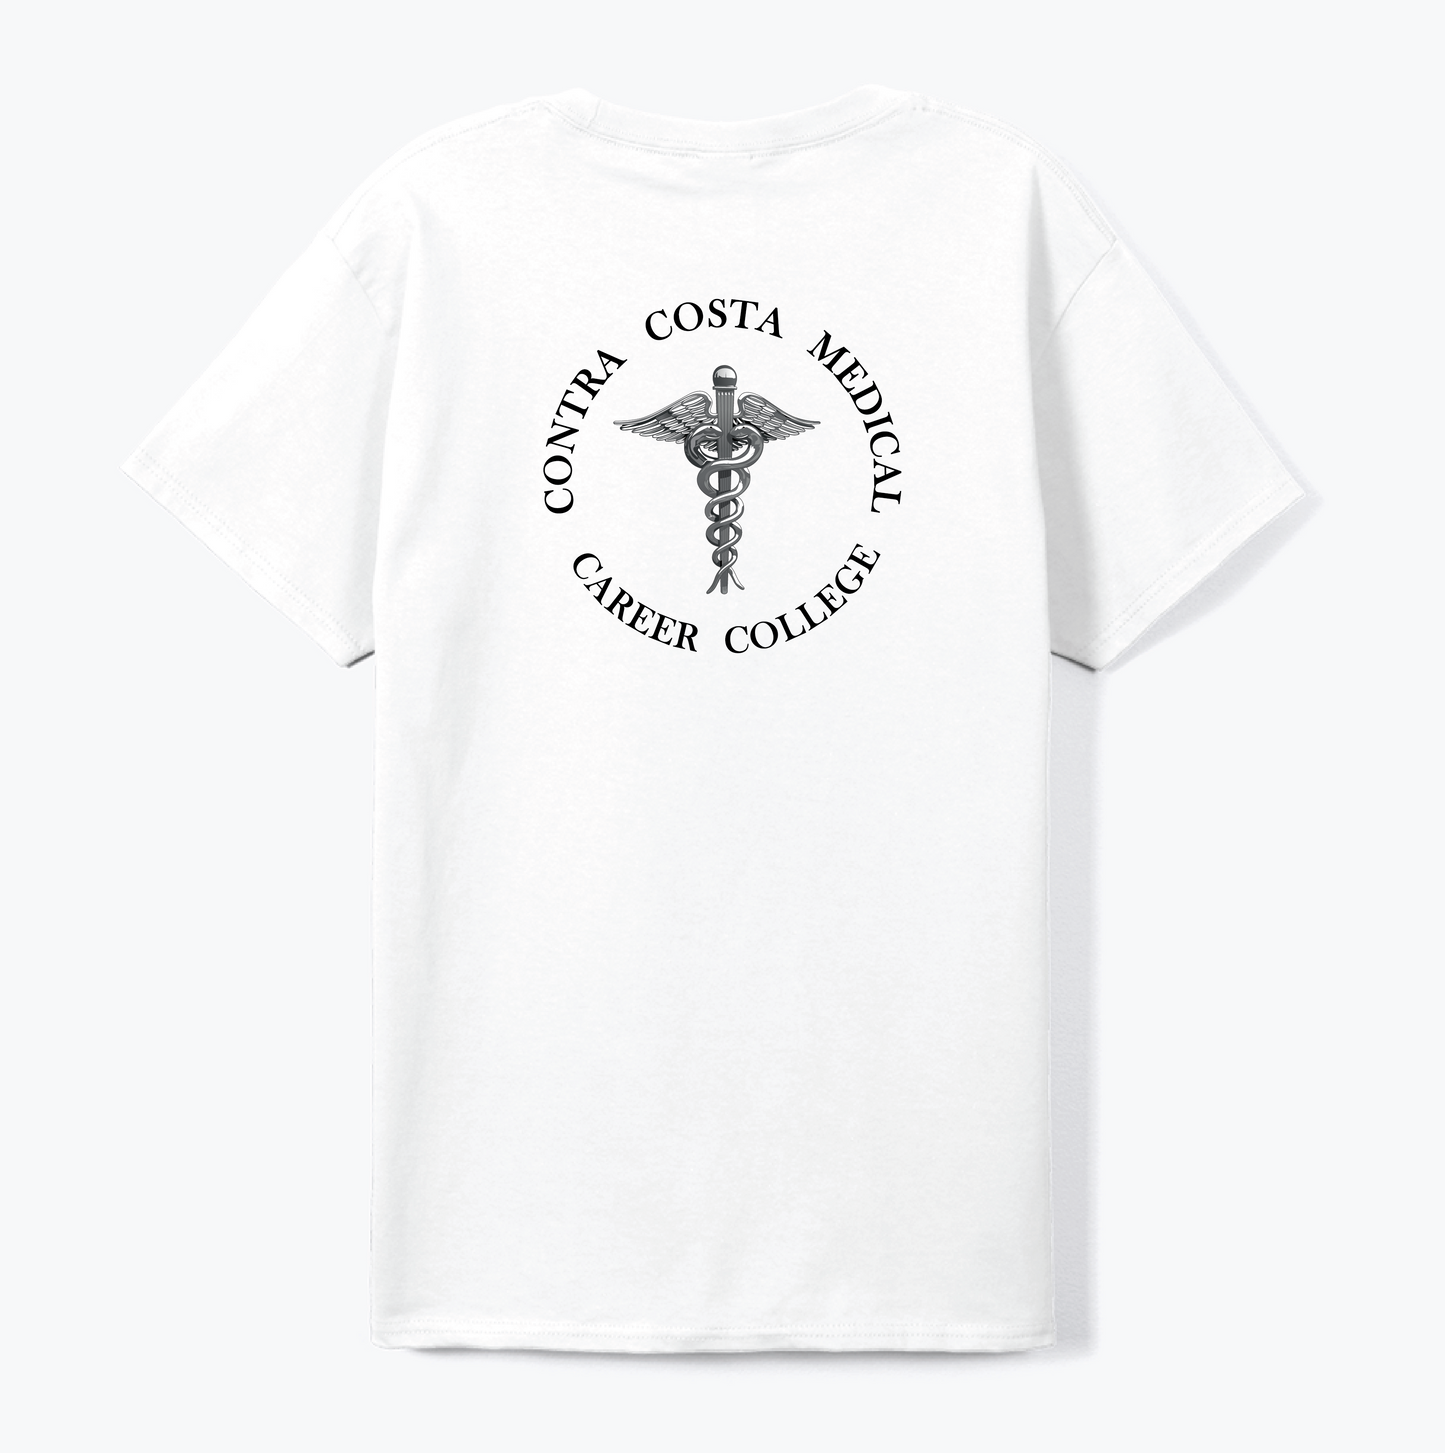 Short Sleeve CCMCC T-shirts